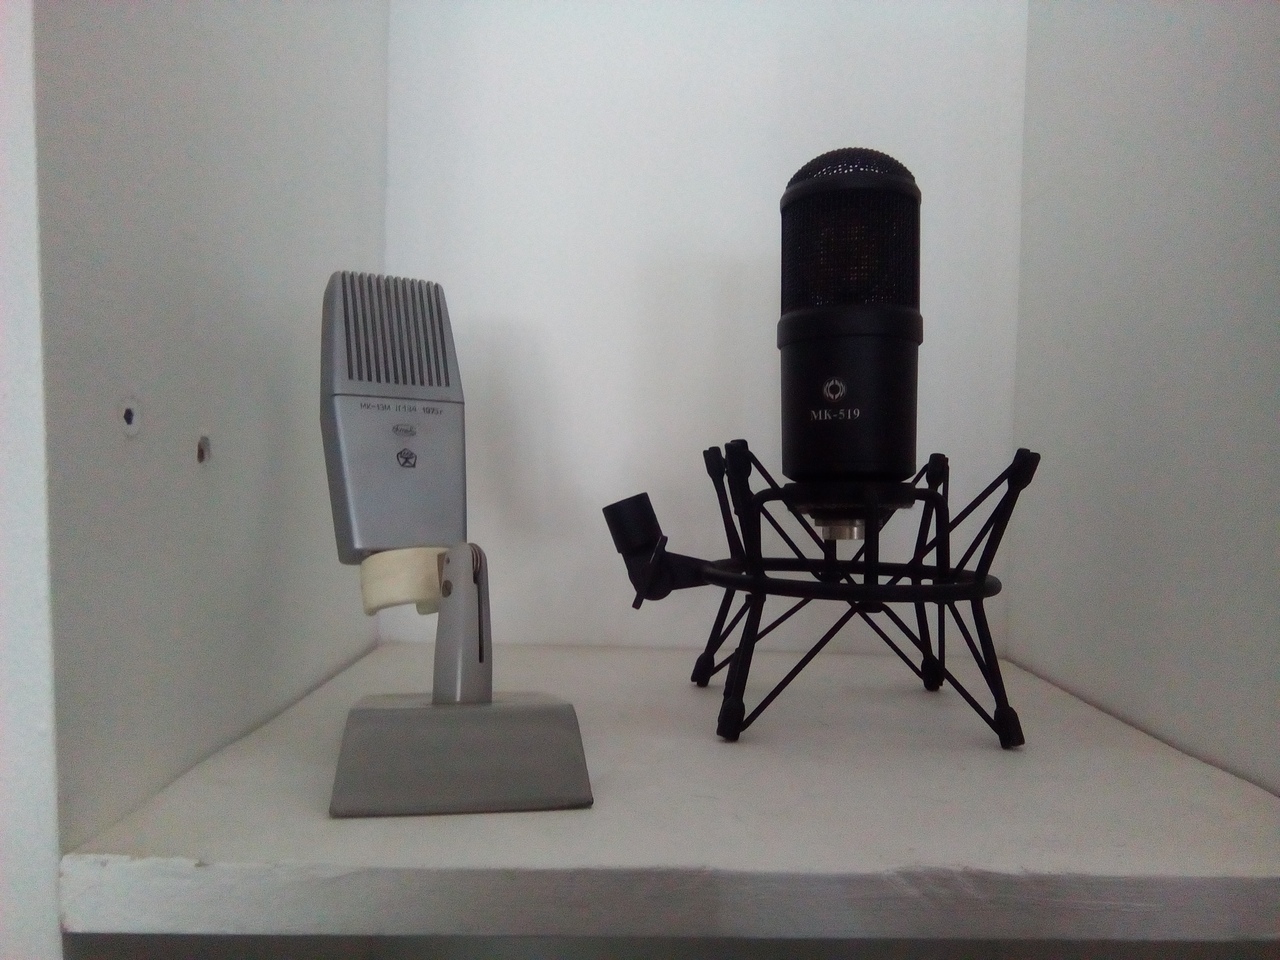 Octave - My, Octave, Microphone, Longpost